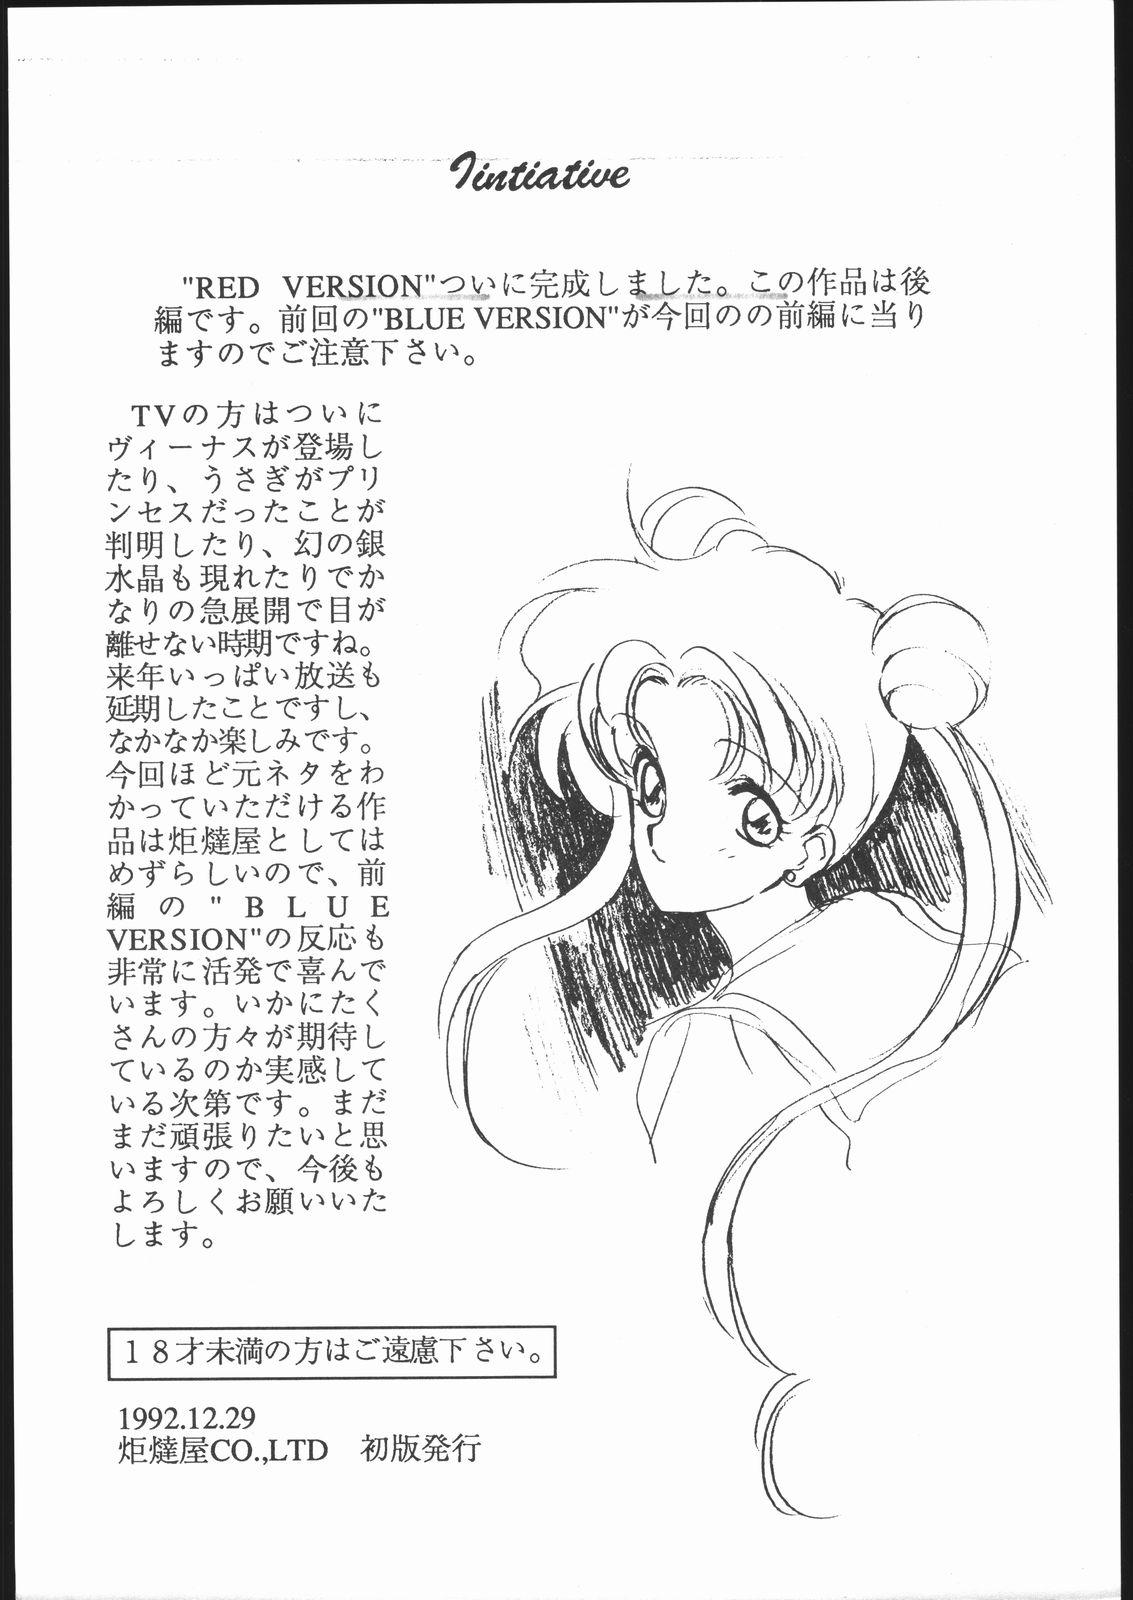 Cousin SAILORS RED VERSION - Sailor moon Telugu - Page 2